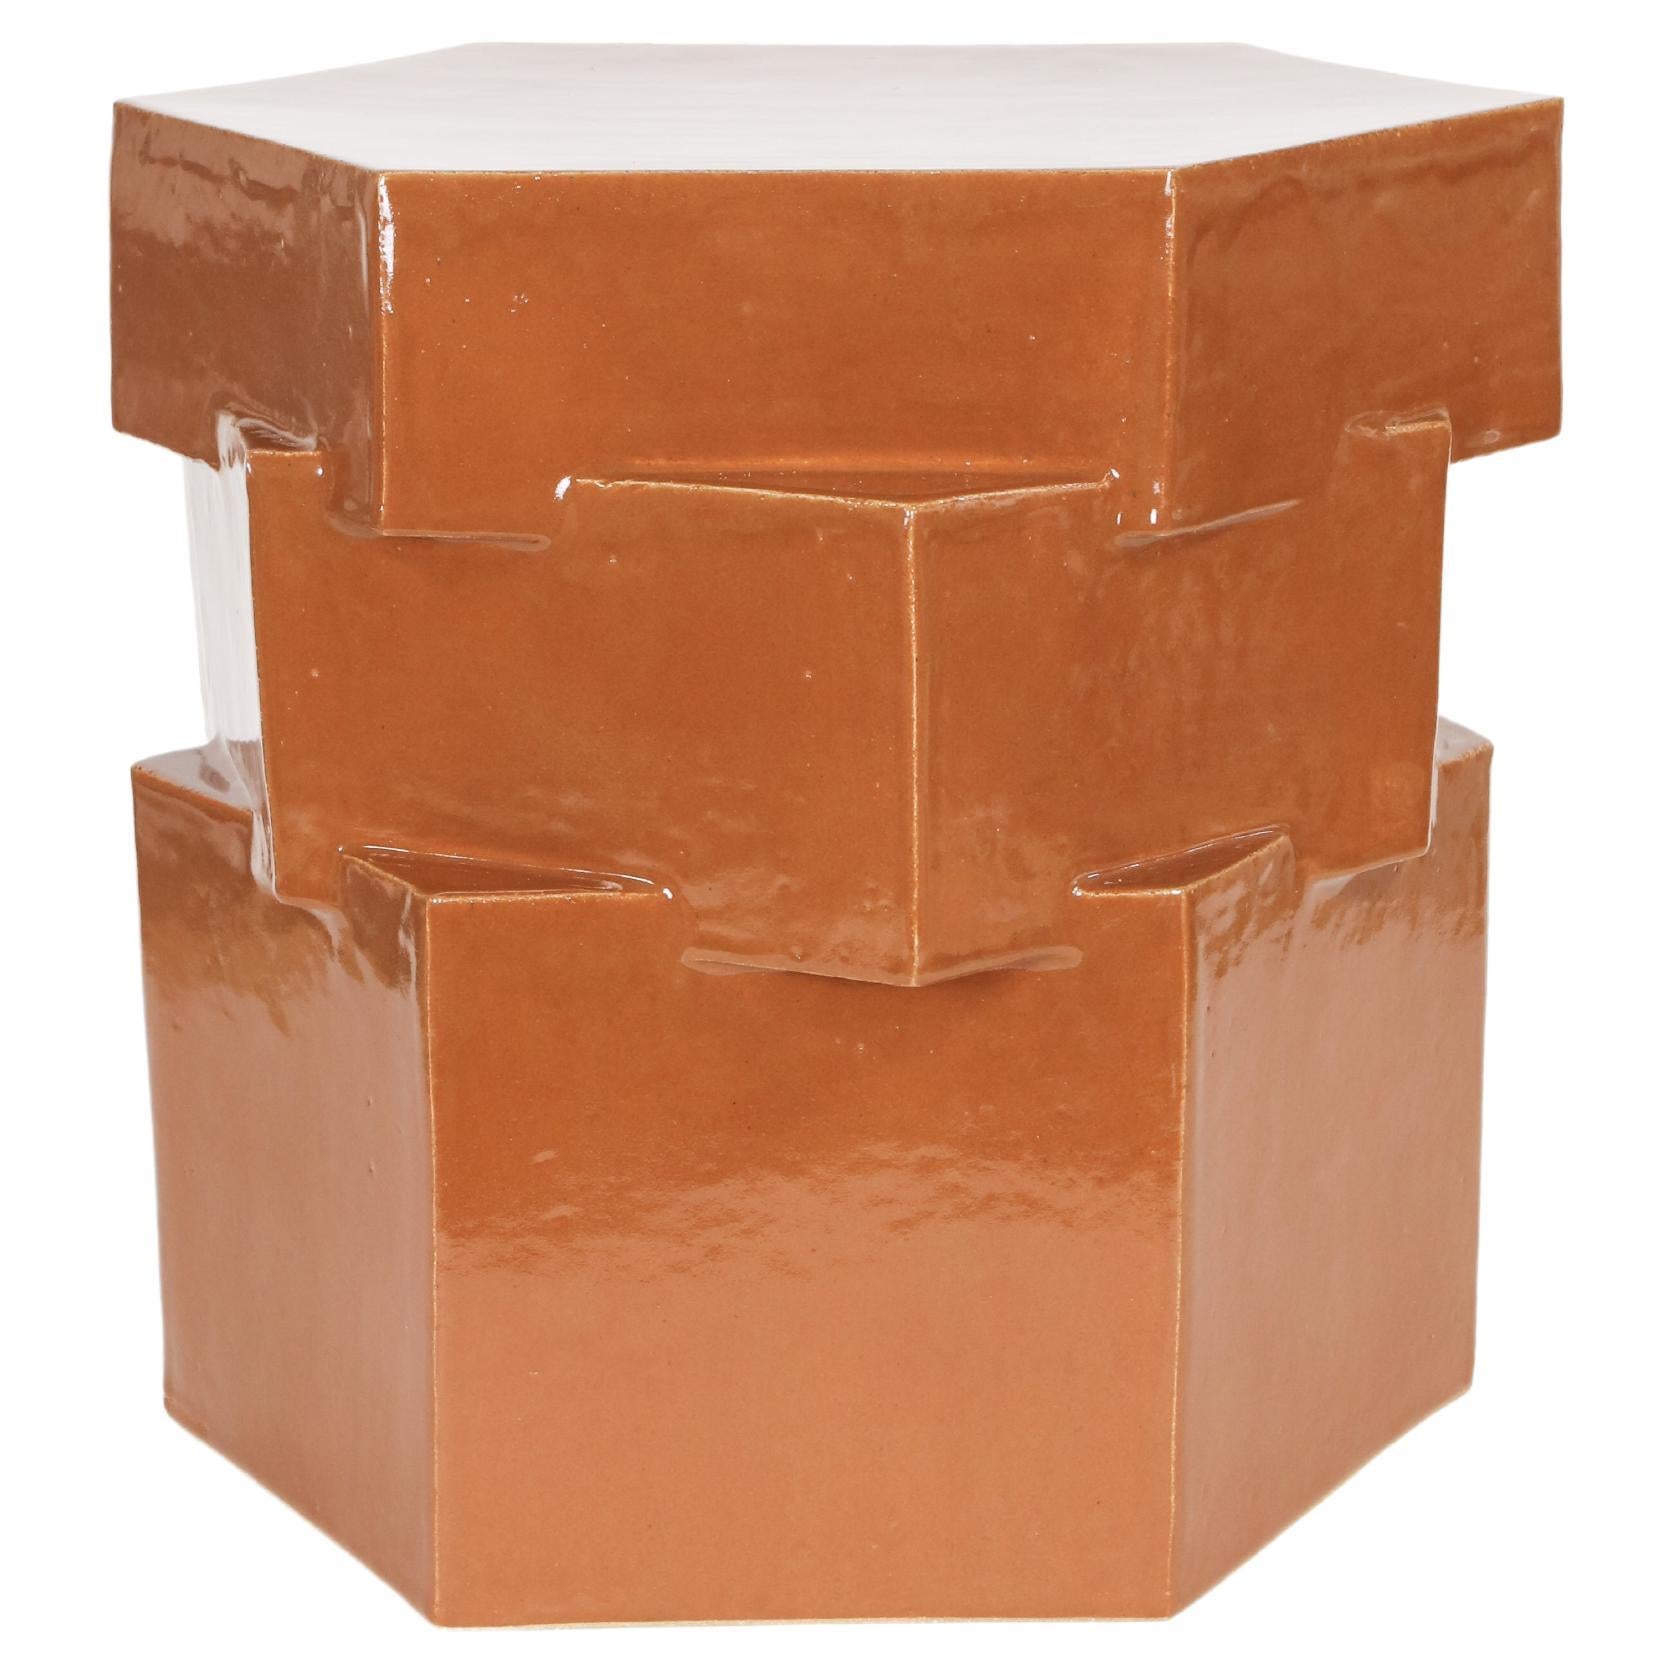 Triple Tier Ceramic Hex Side Table in Cinnamon by BZIPPY For Sale